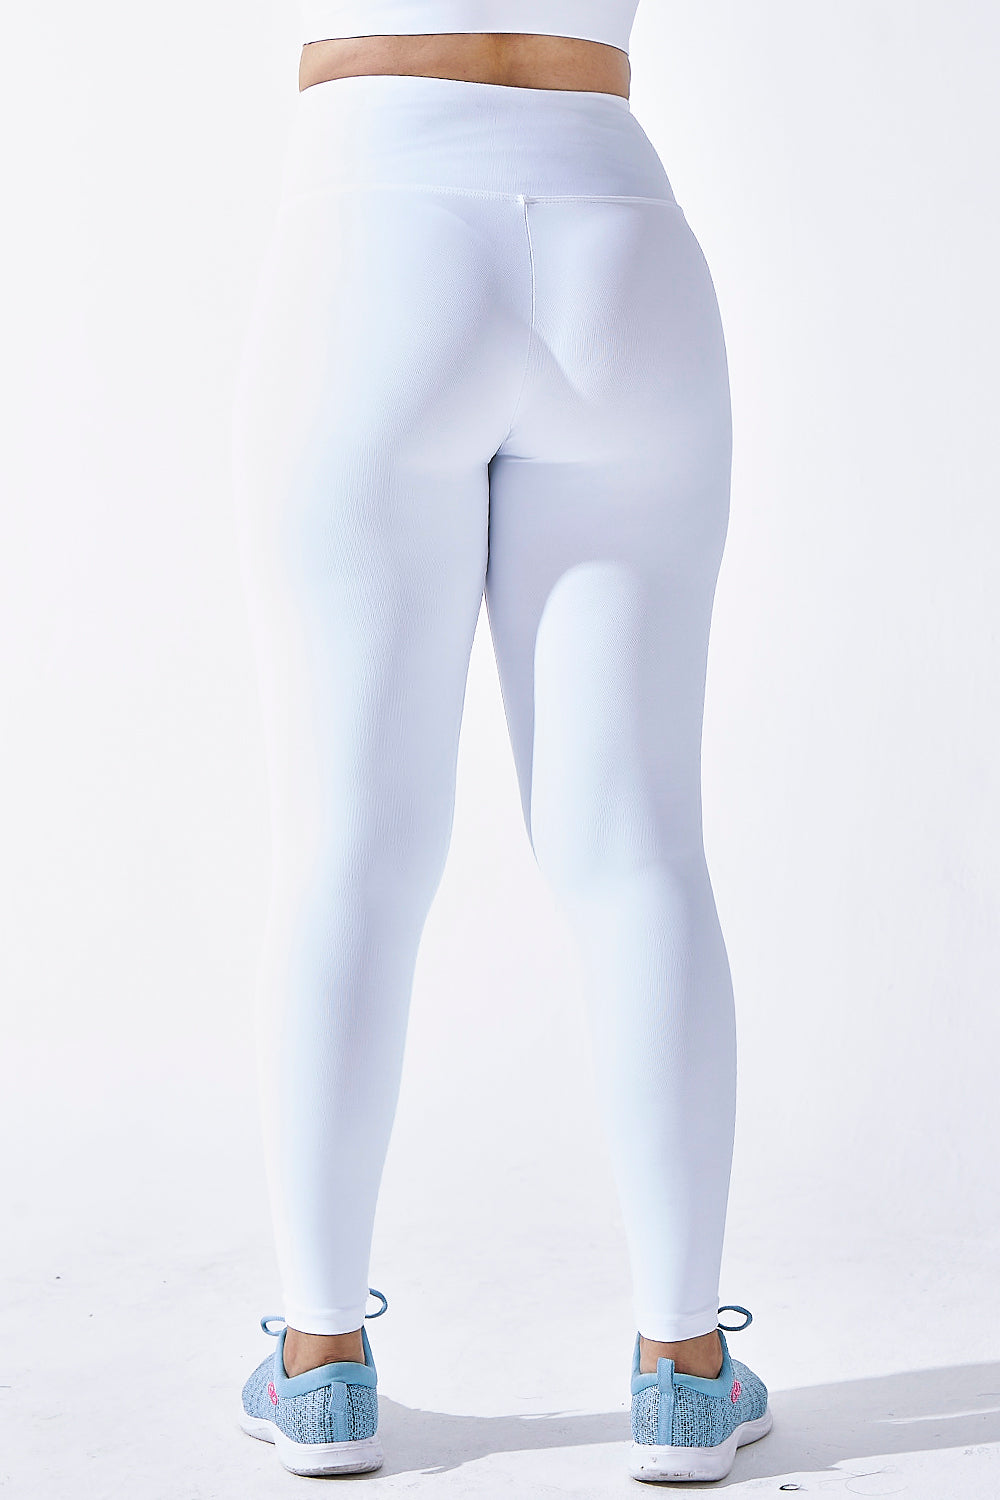 Legging Modeladora Lisa – Fit Mulher